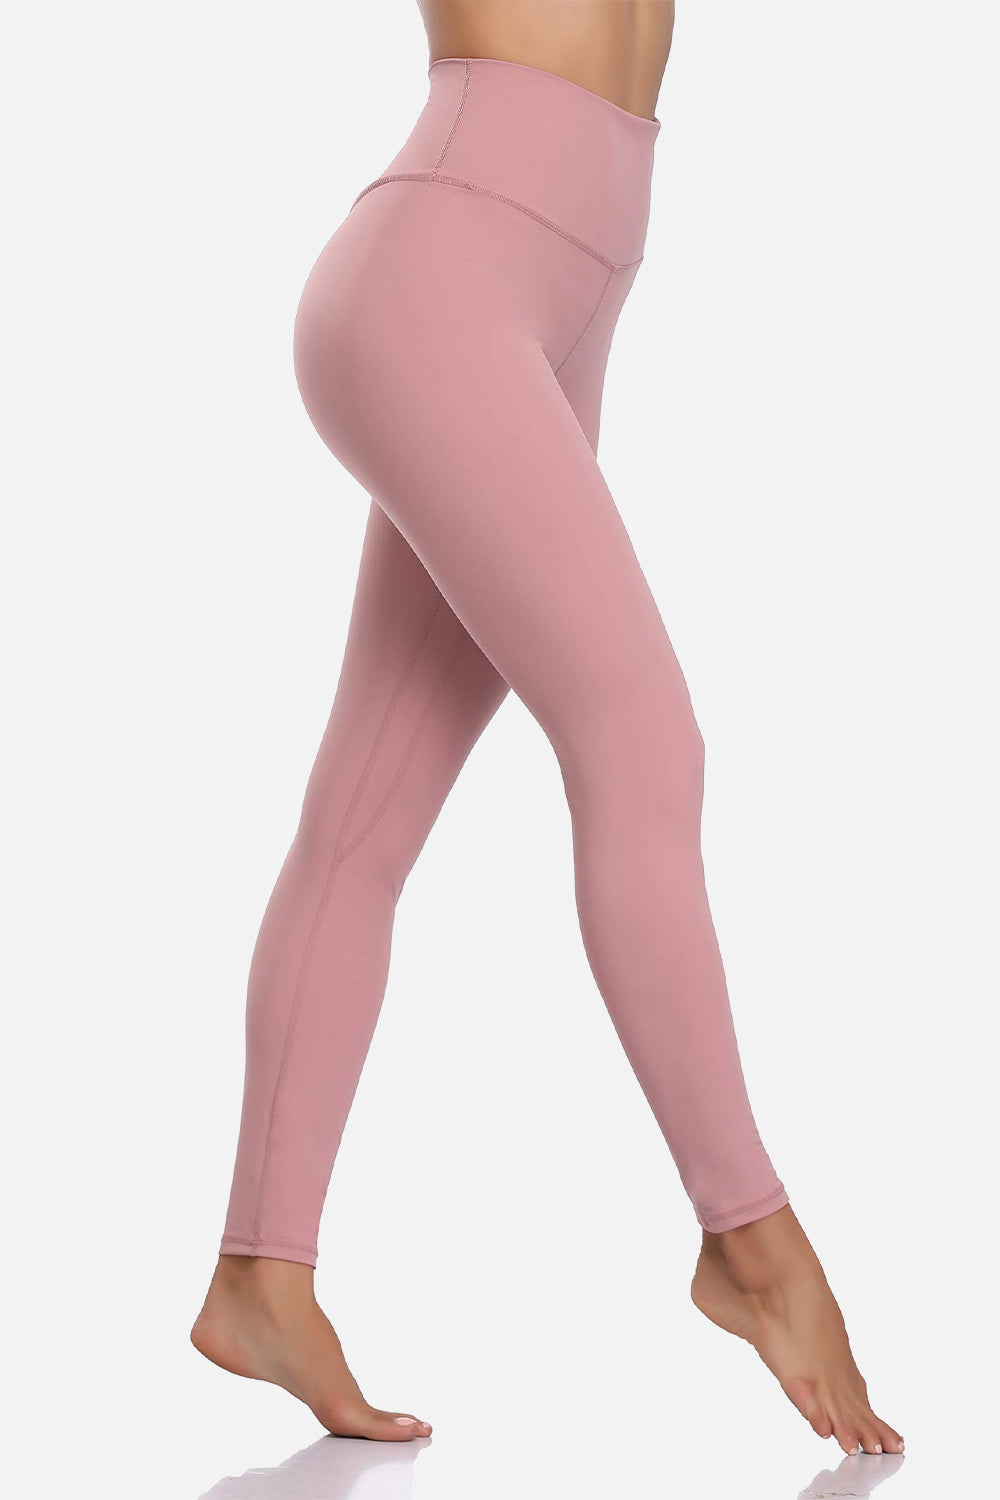 Colorfulkoala Womens Buttery Soft High Waisted Yoga Pants Full-Length  Leggings